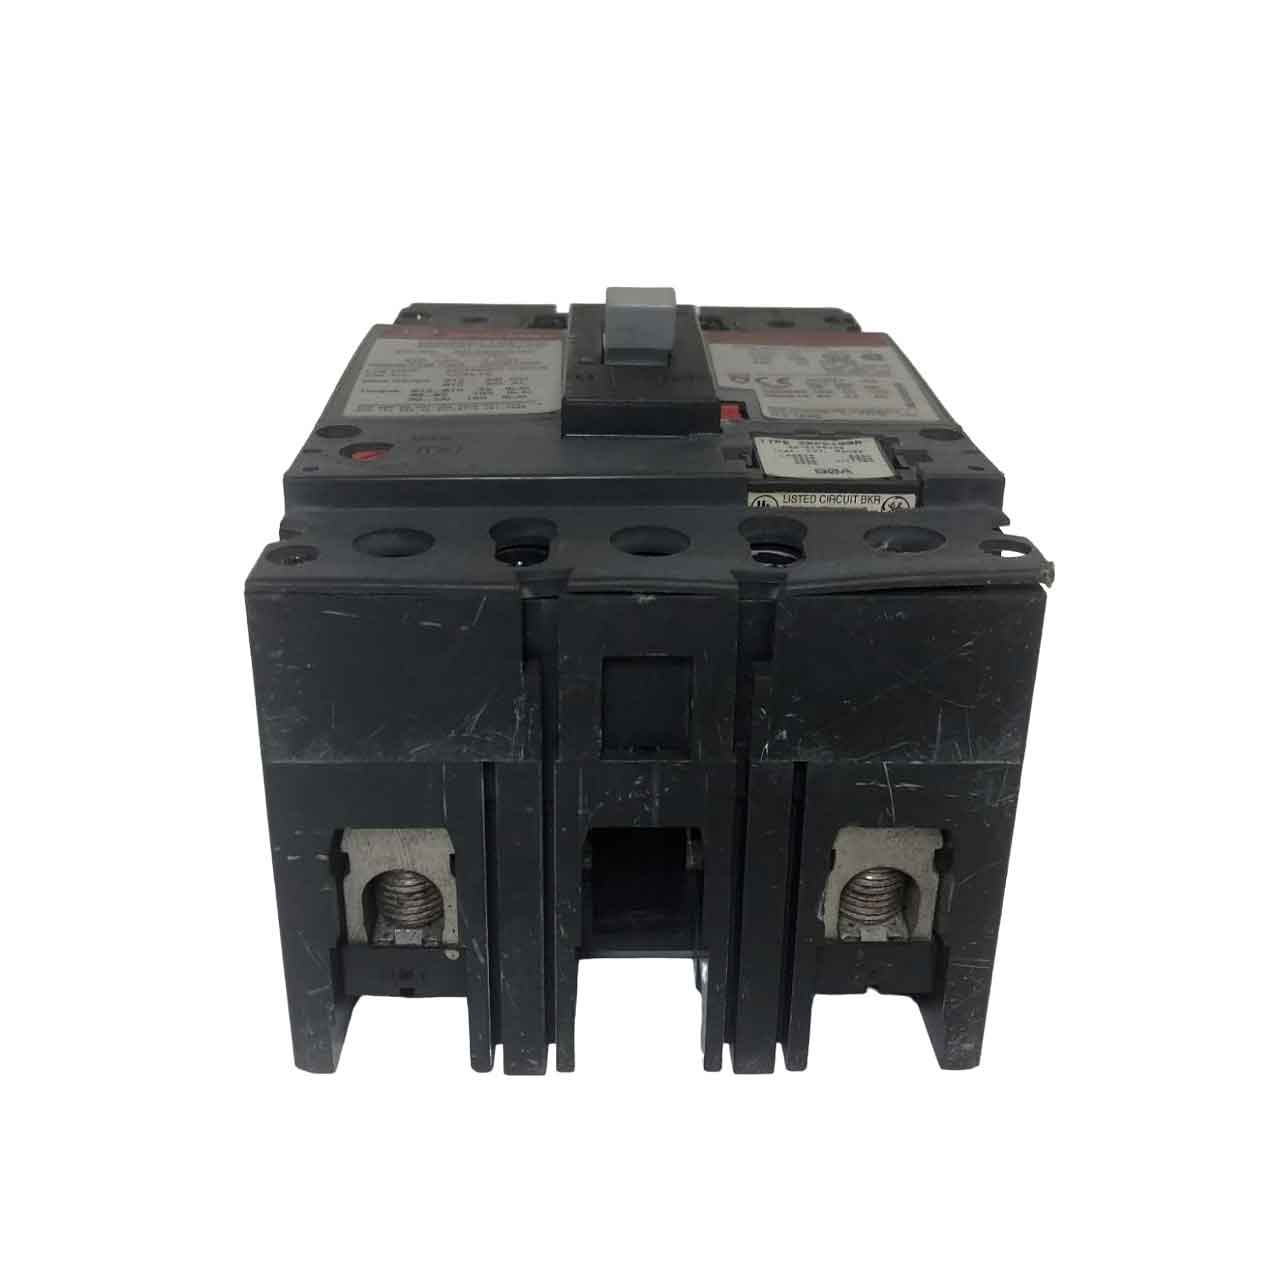 SELA24AT0100 - General Electrics - Molded Case Circuit Breakers